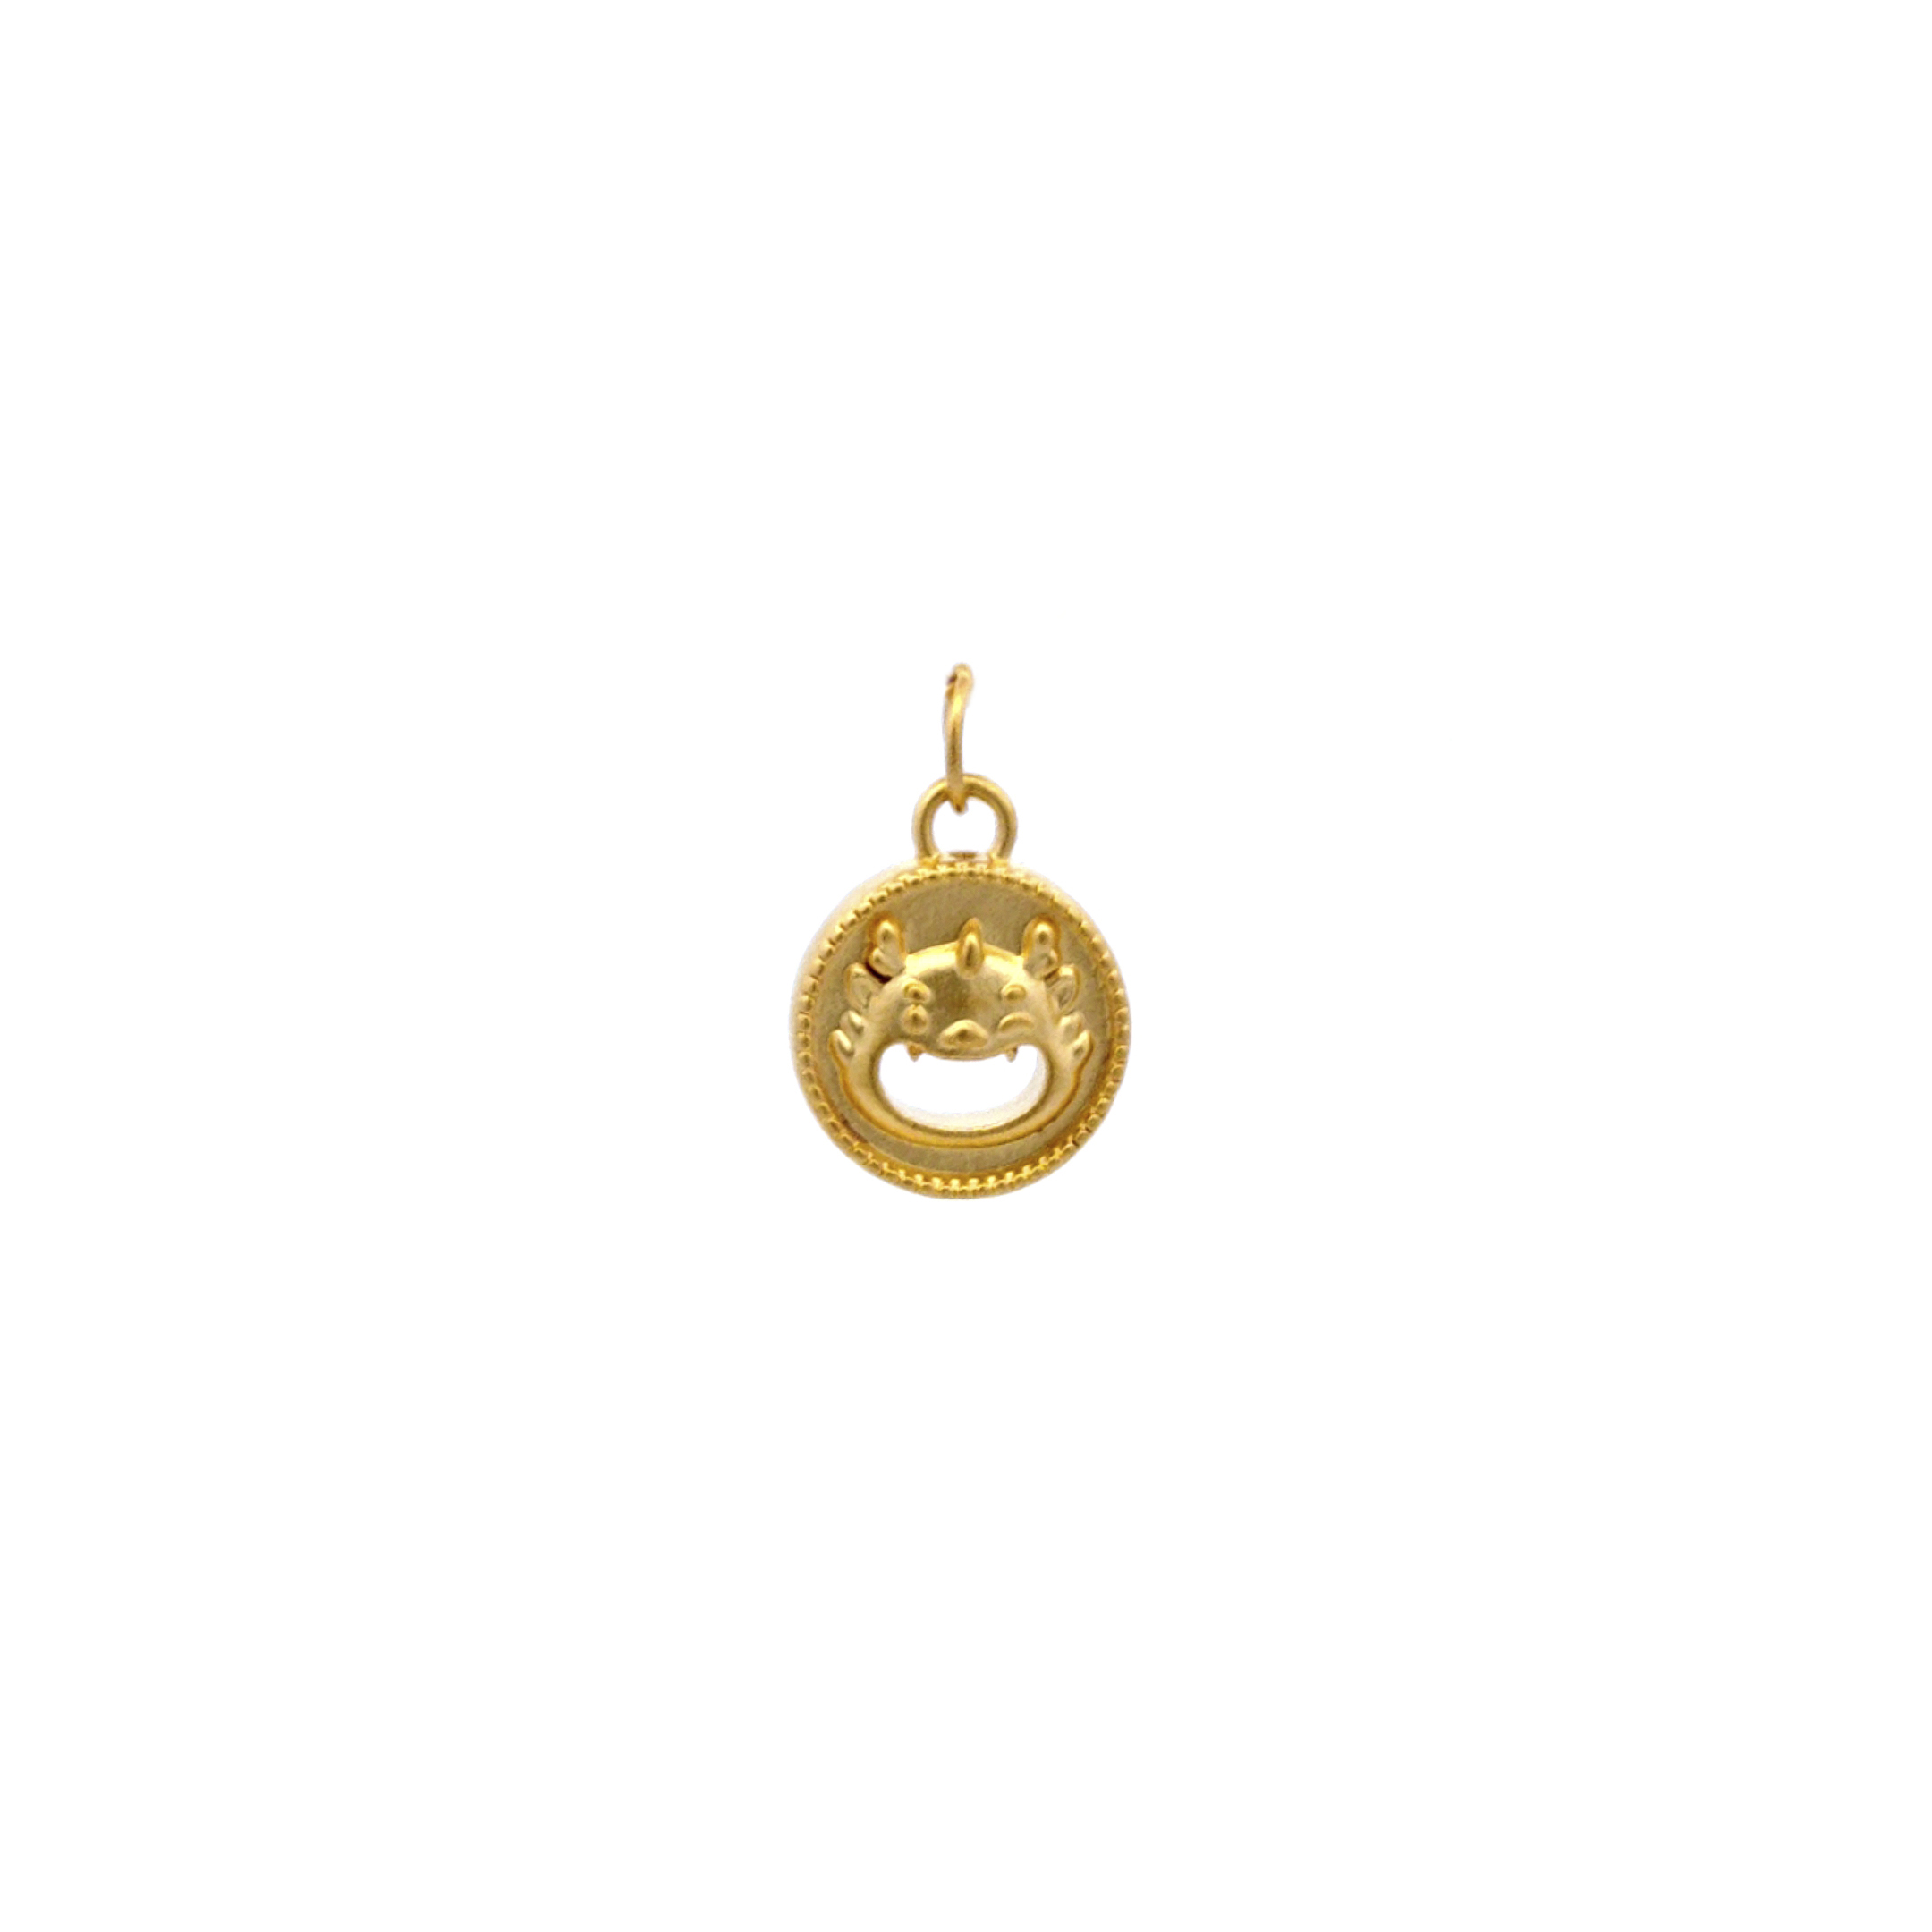 TIANSI 999 (24K) Gold Lucky Smile Dragon Pendant